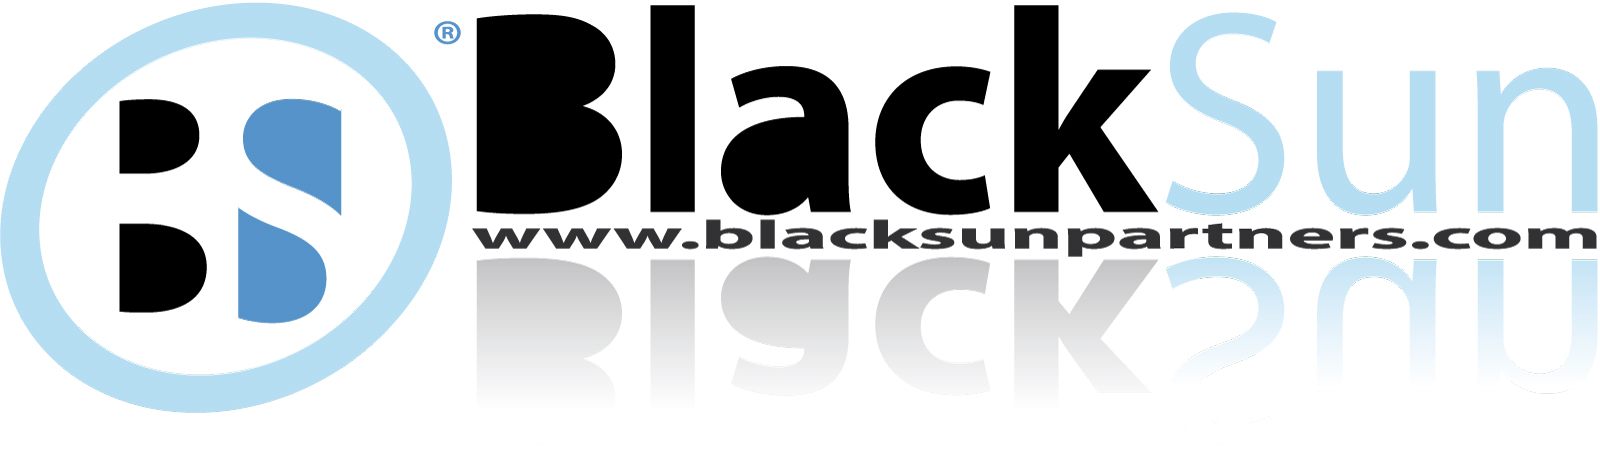 BlackSun Partners